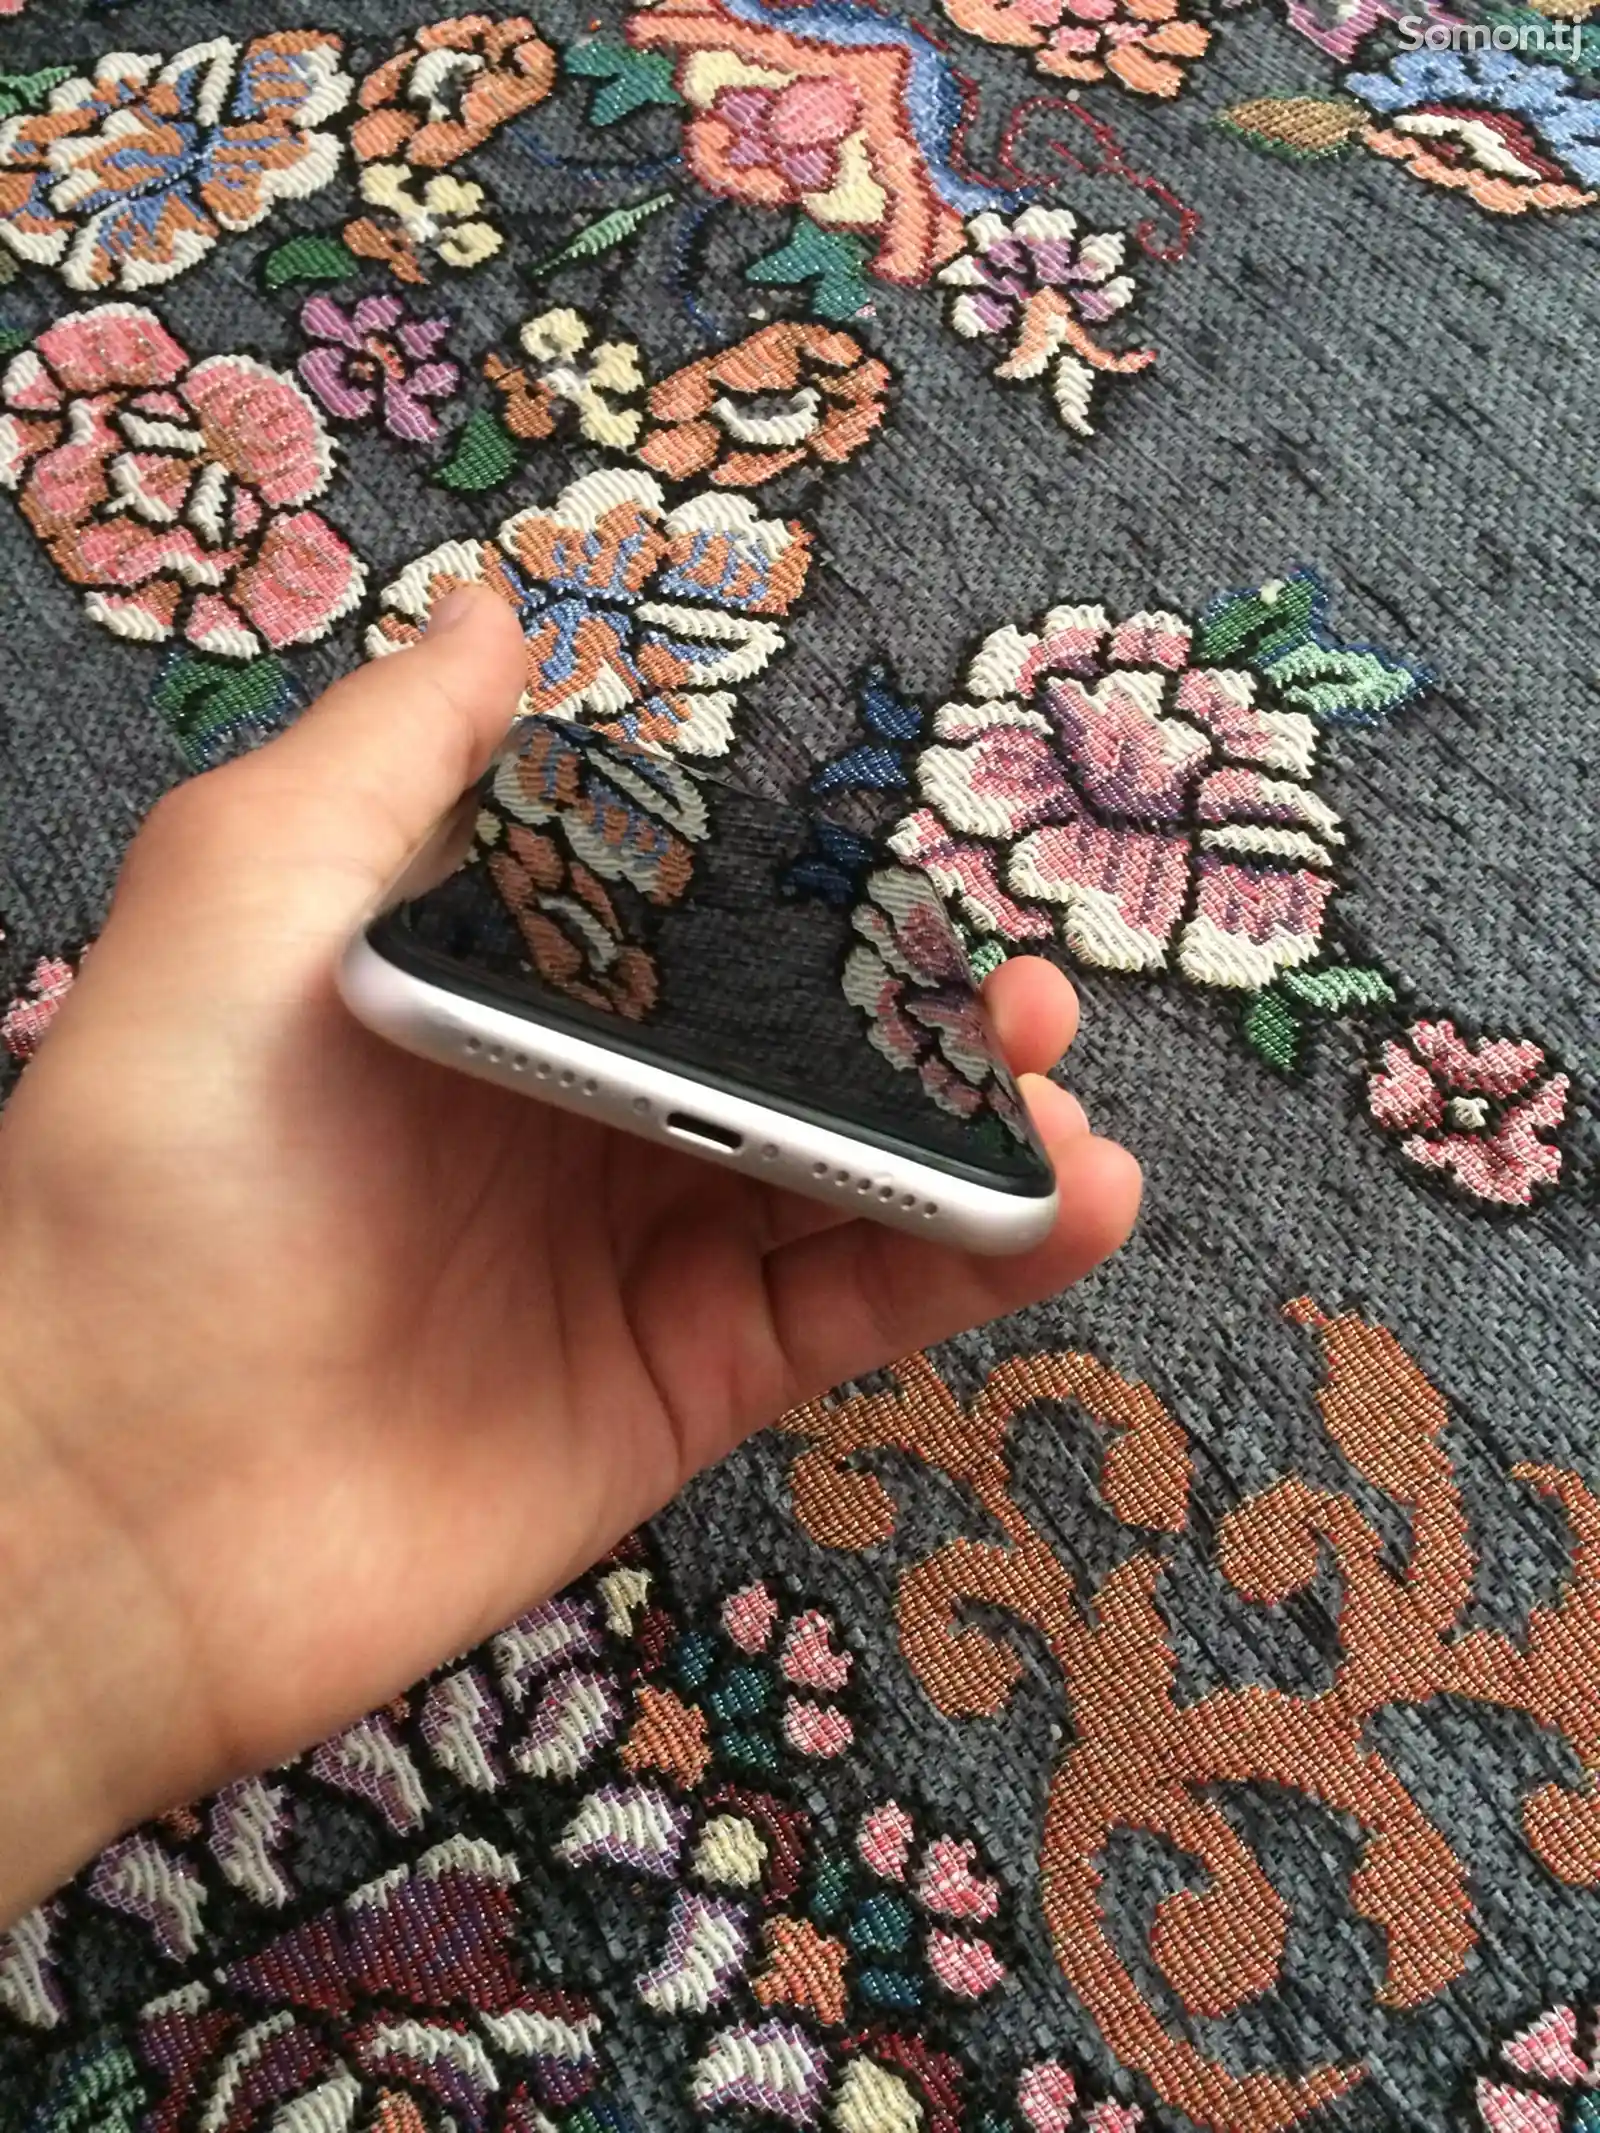 Apple iPhone 11, 128 gb, White-6